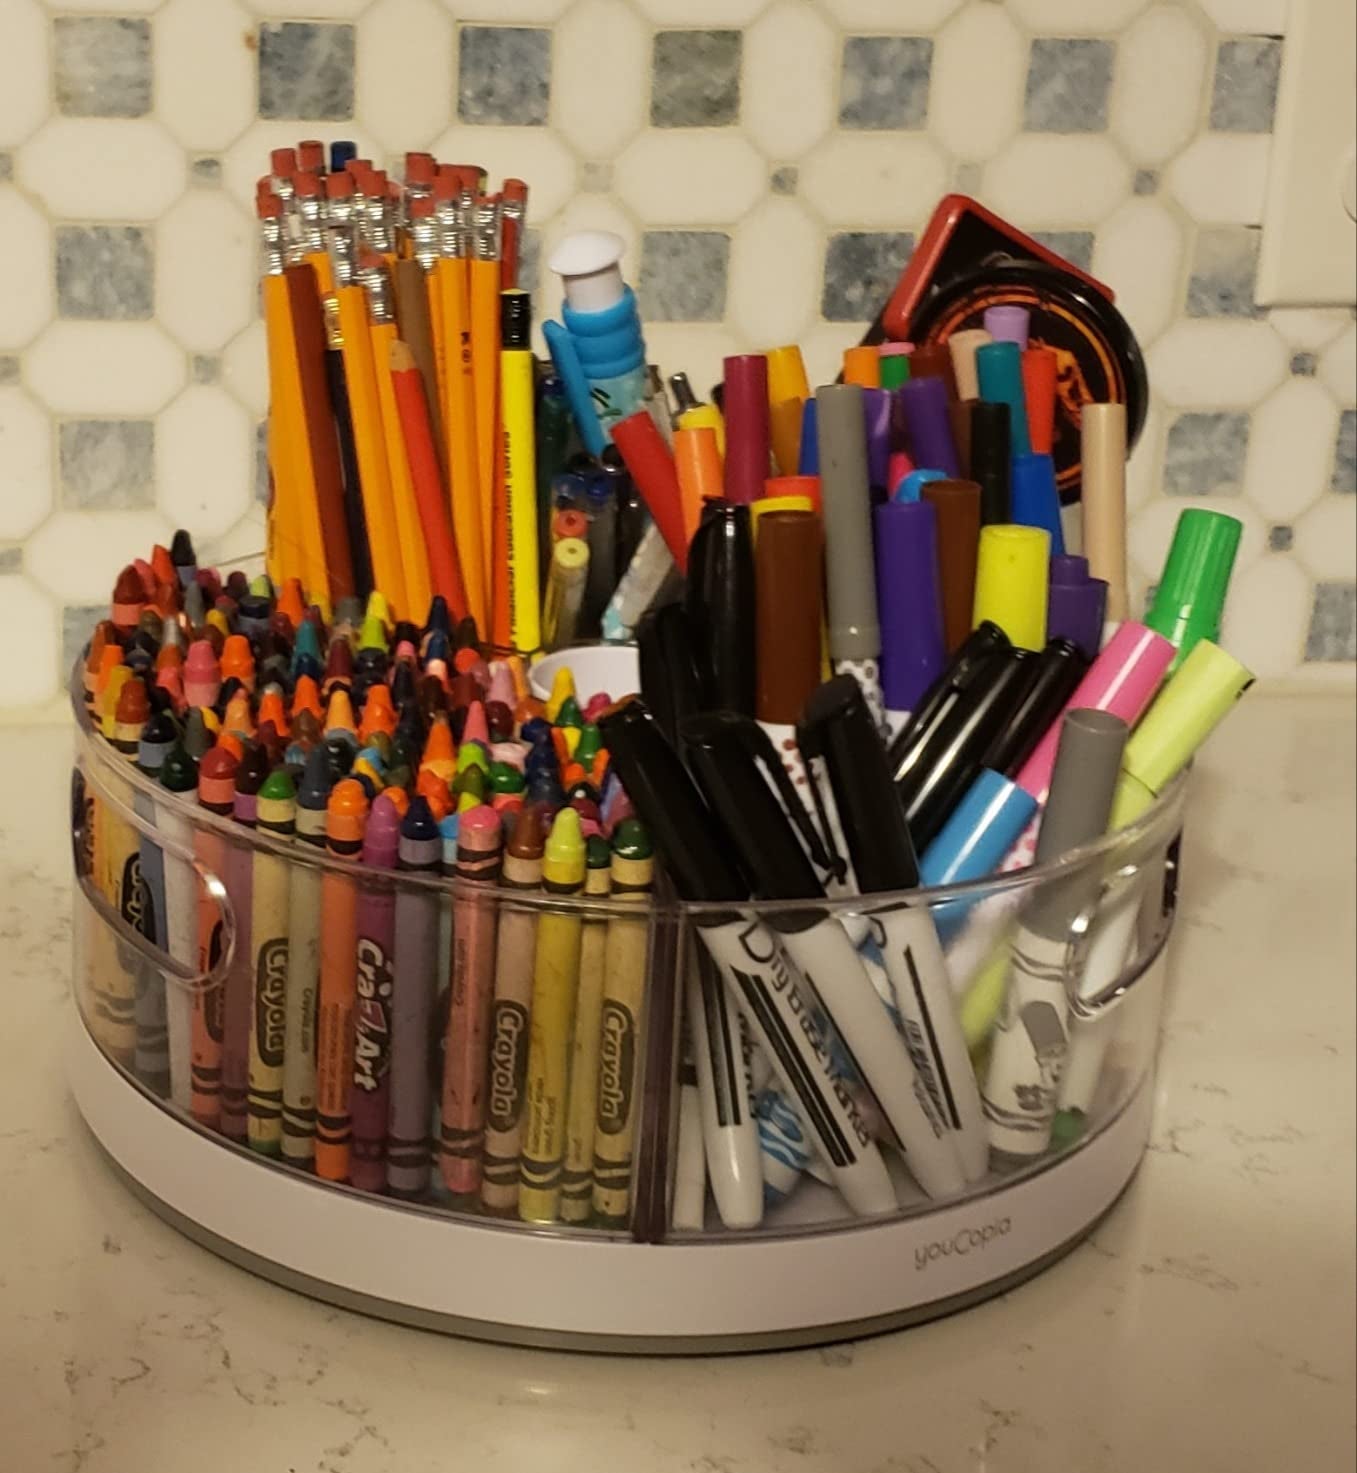 crayola bath crayons stain｜TikTok Search